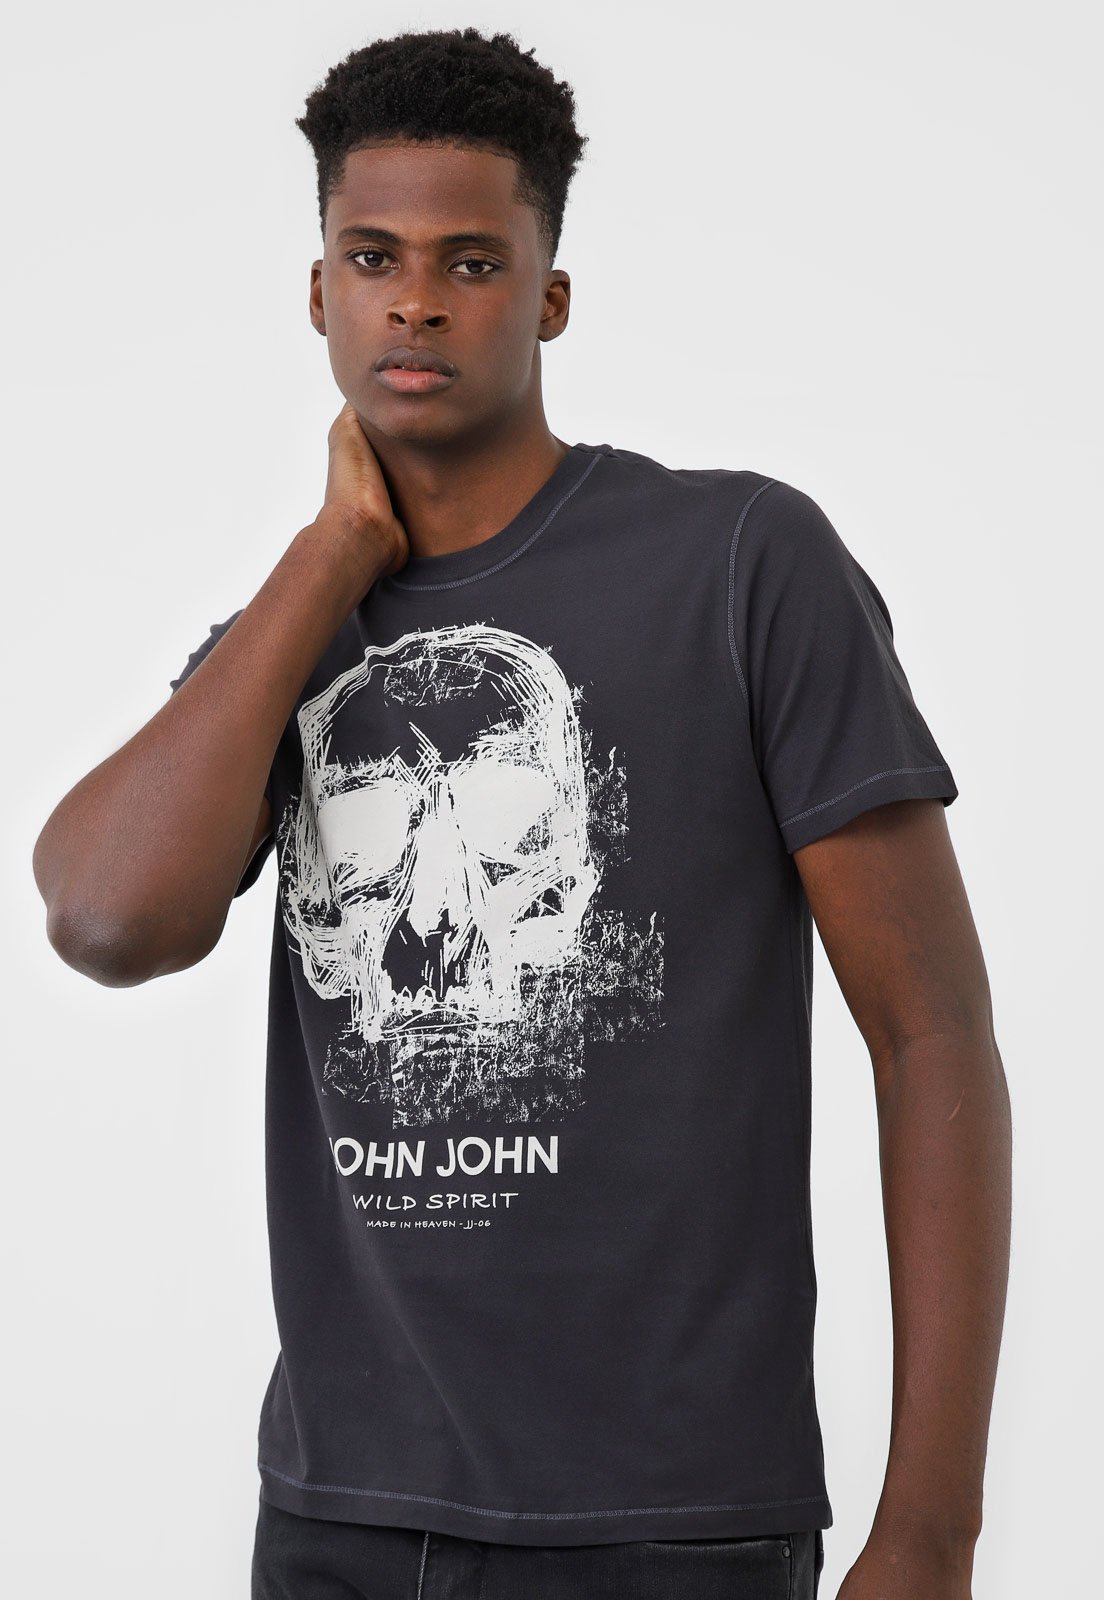 Camiseta John John Caveira Grafite - Compre Agora